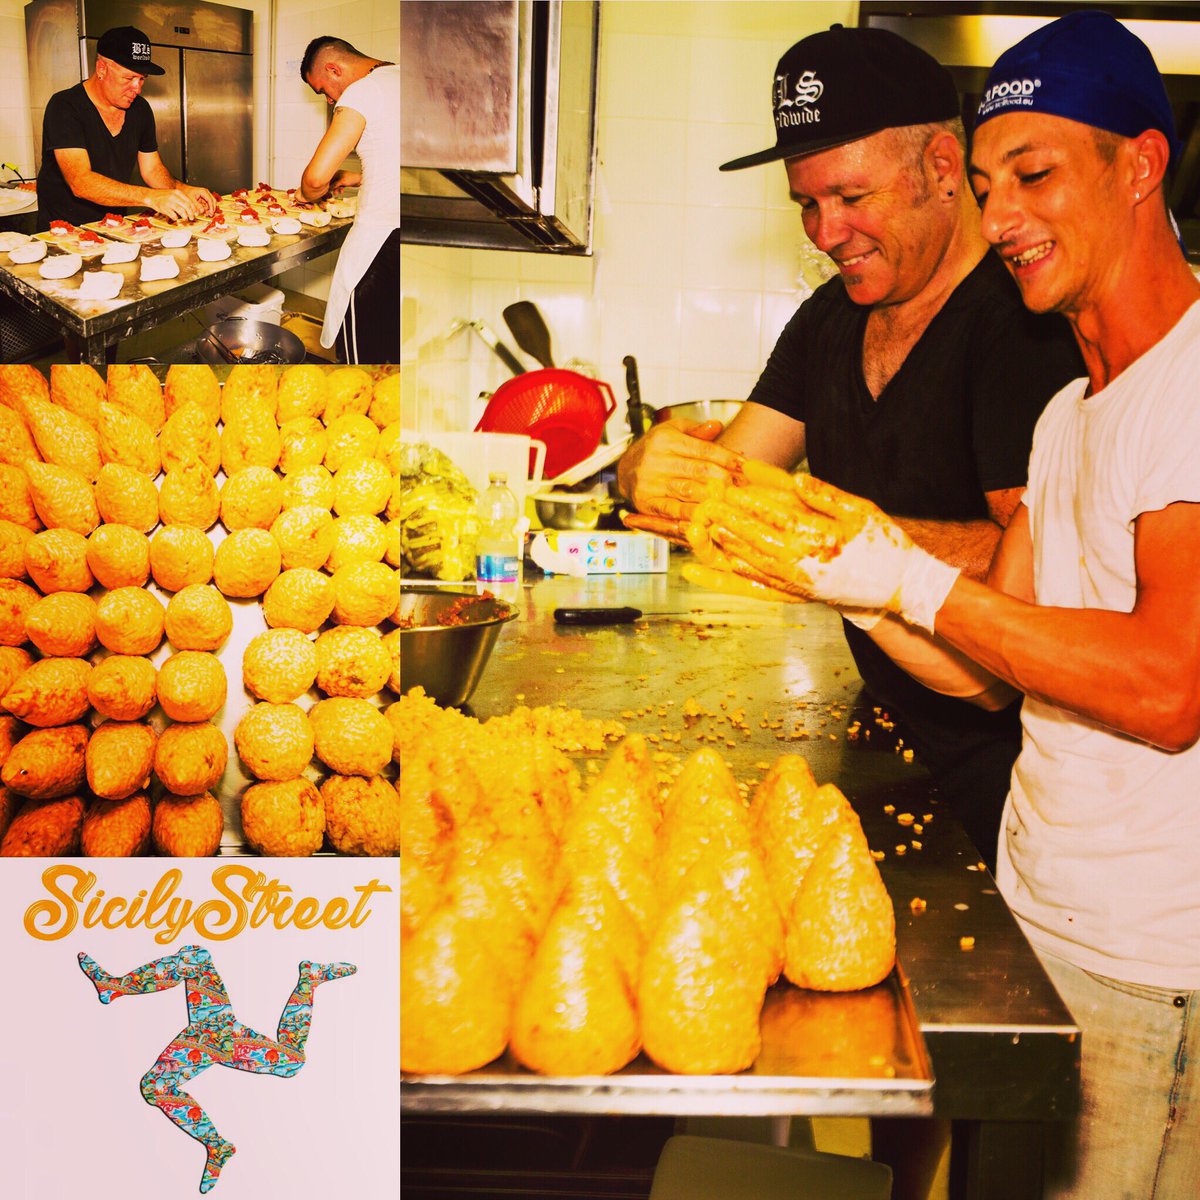 #tbt 6 weeks ago, in Sicily, honing those Arancini making skills. 
•
•
#arancini #sicilystreet #sicilystreetla #sicilystreet_la #malibufarmersmarket #sicilia #malibu #losangeles #risottoballs